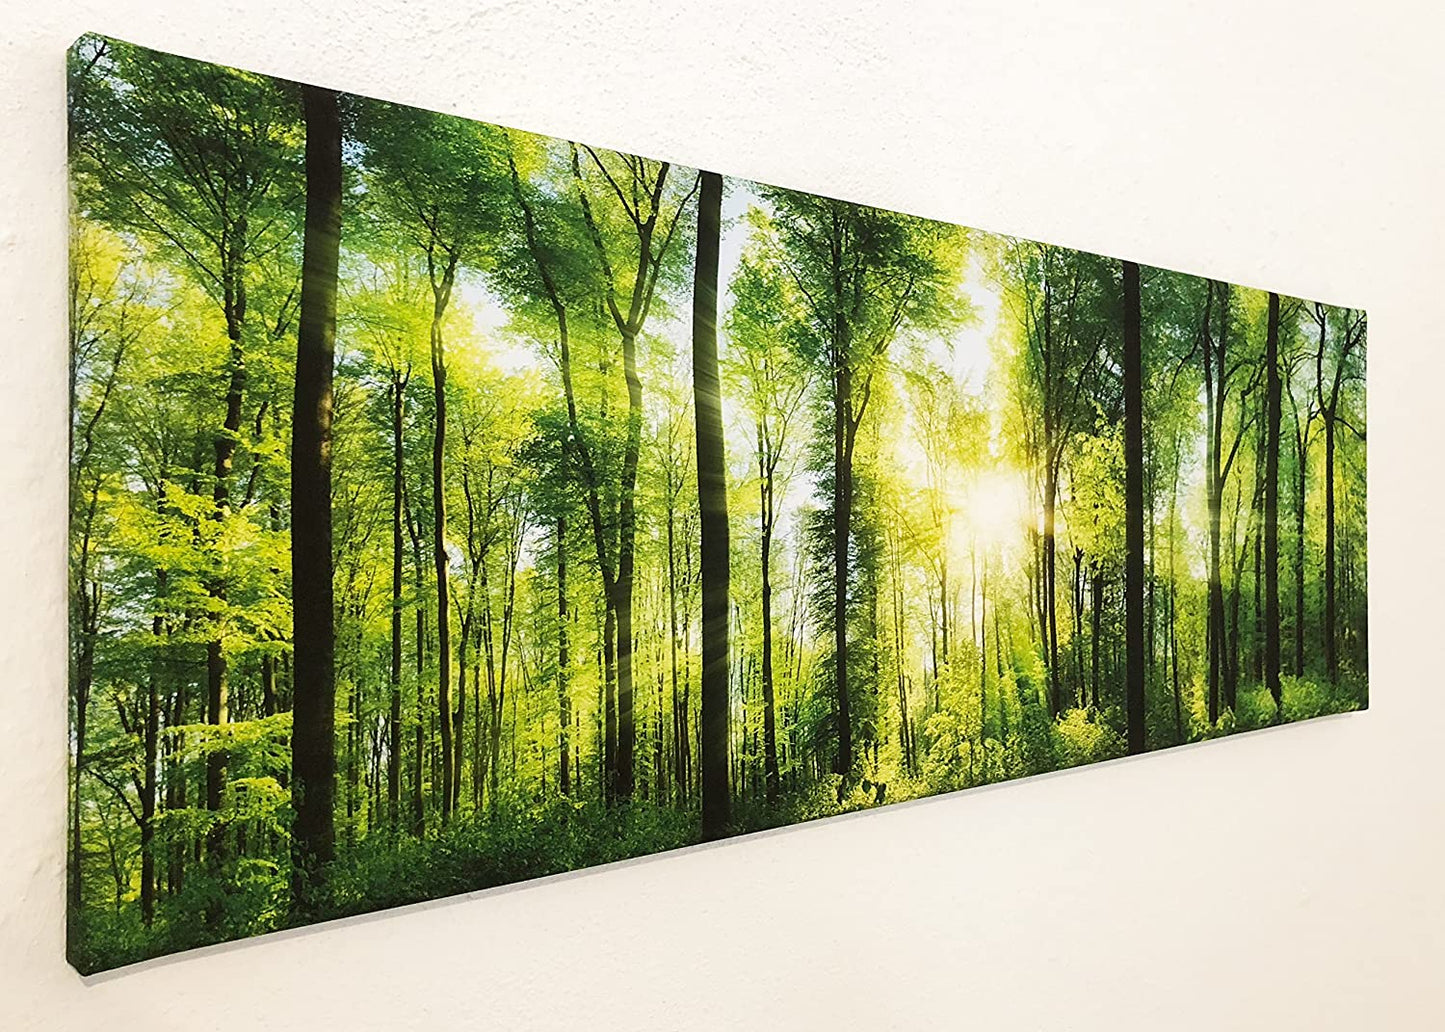 PICSonPAPER Leinwandbild Panorama Wald, 90 cm x 30 cm, Dekoration, Kunstdruck, Wandbild, Geschenk, Leinwand Natur (Wald)